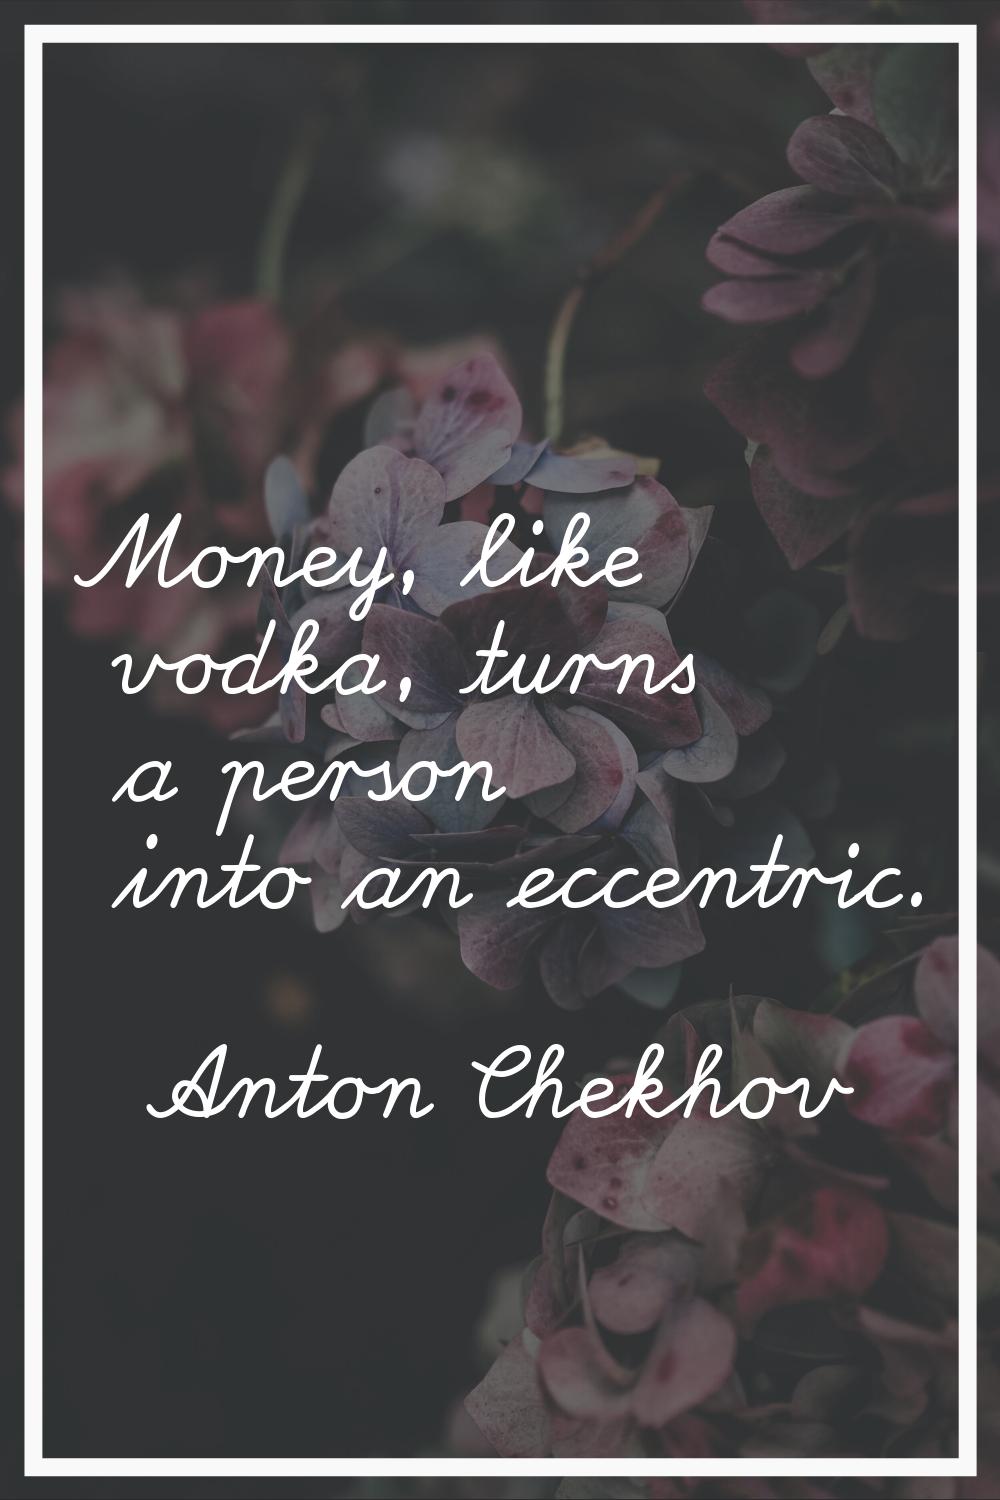 Money, like vodka, turns a person into an eccentric.